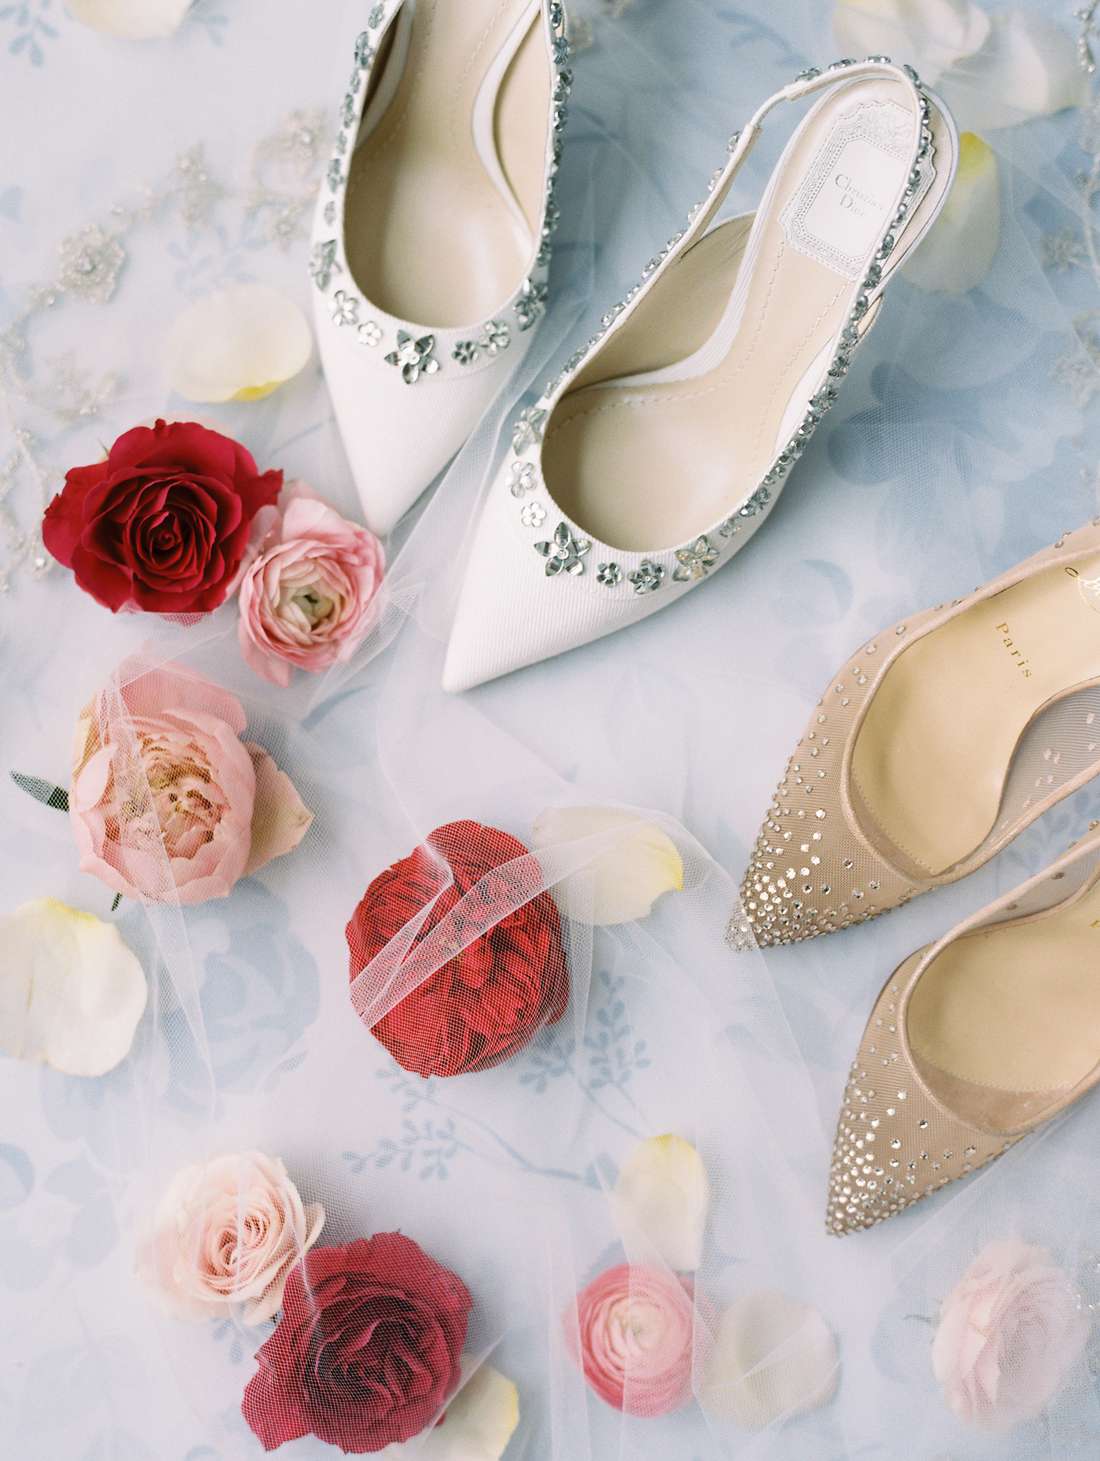 Emiki Women's High Heel Peep Toe Platform Stiletto Slip on Dress Pump Shoes for Wedding Party Wedding Dress Party Shoes